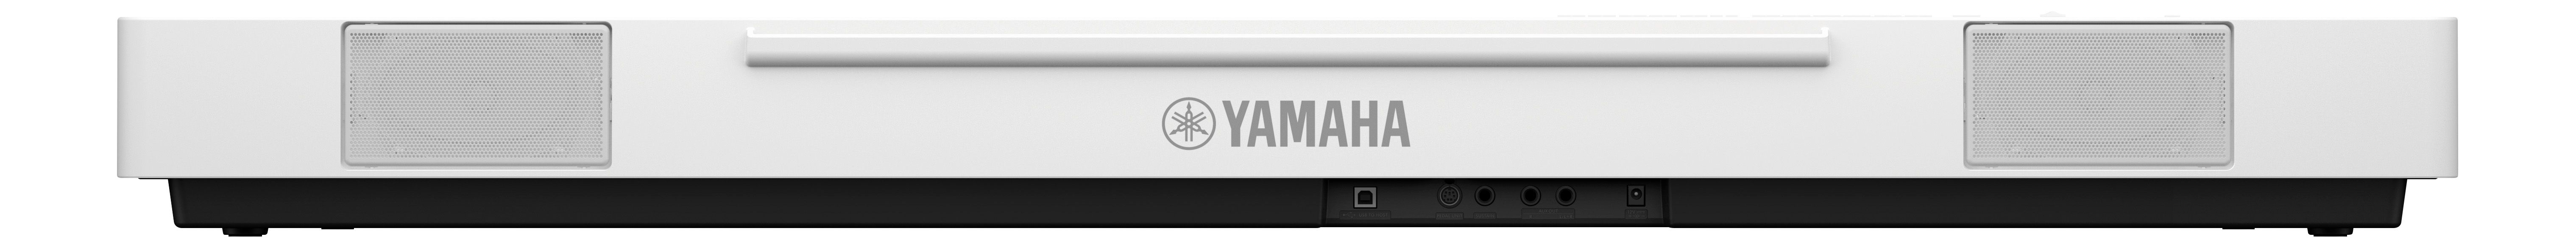 Yamaha P-225 White - Portable digital piano - Variation 1